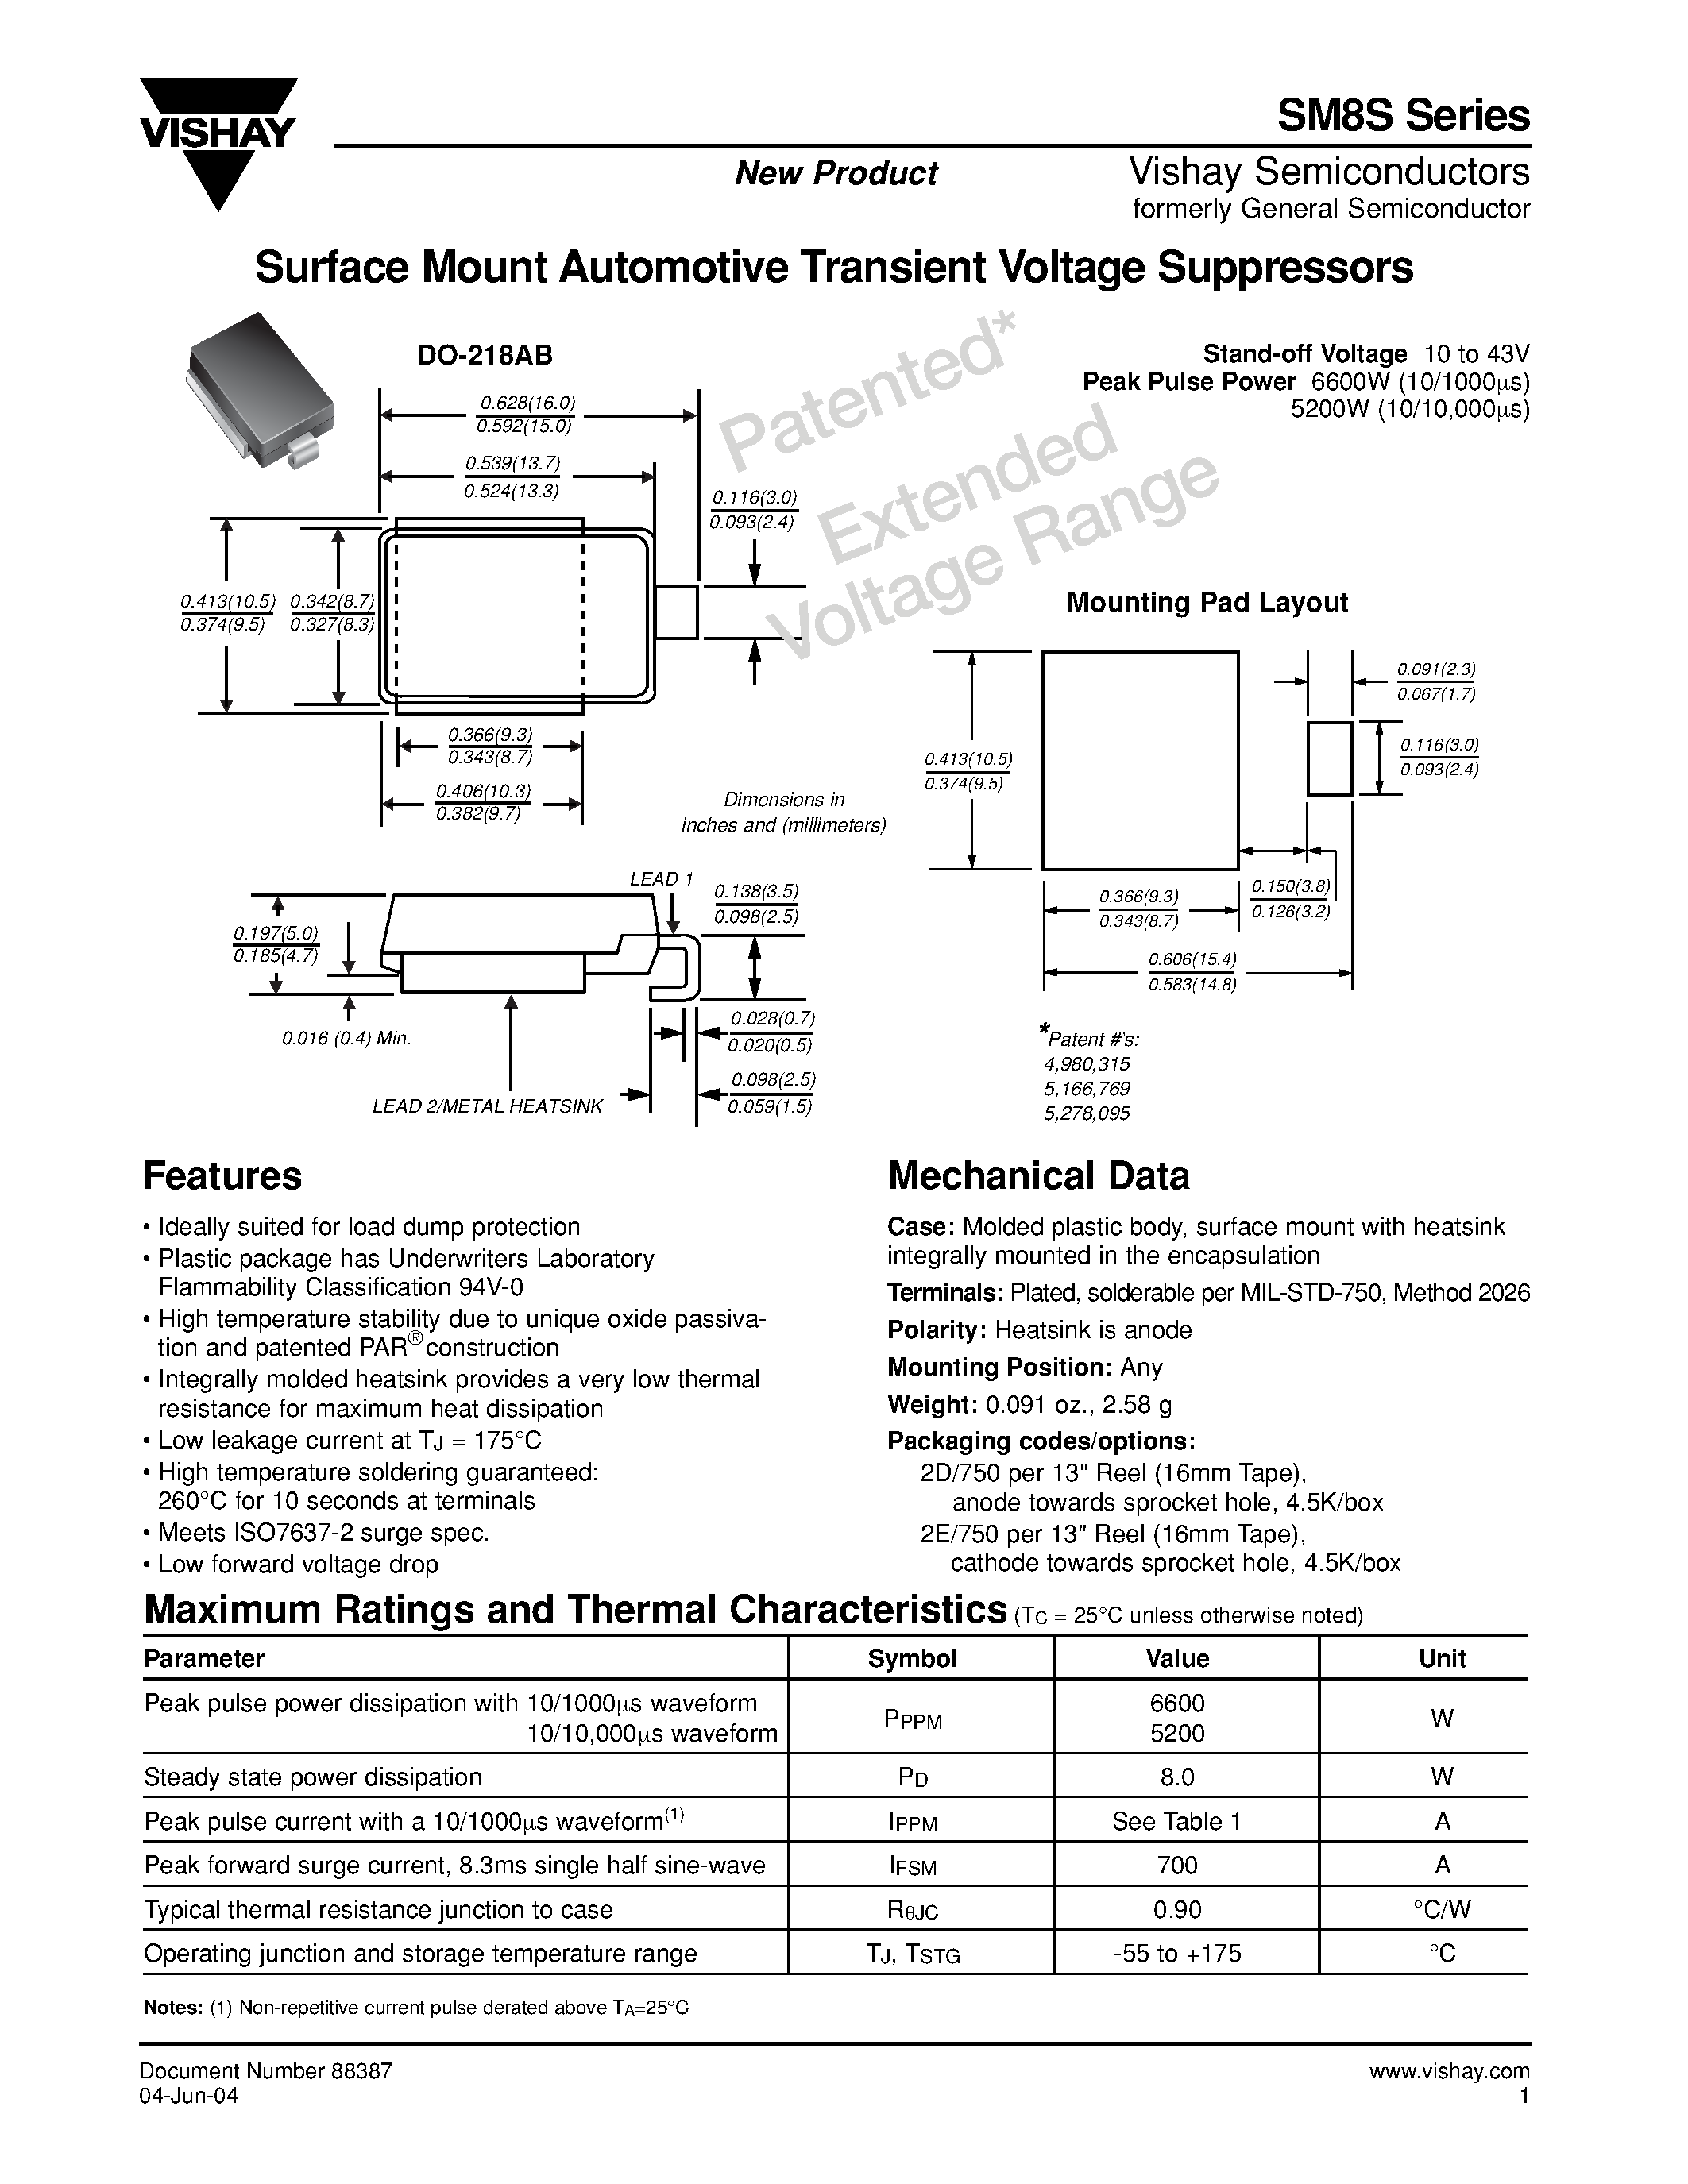 Даташит SM8S33A - Surface Mount Automotive Transient Voltage Suppressors страница 1